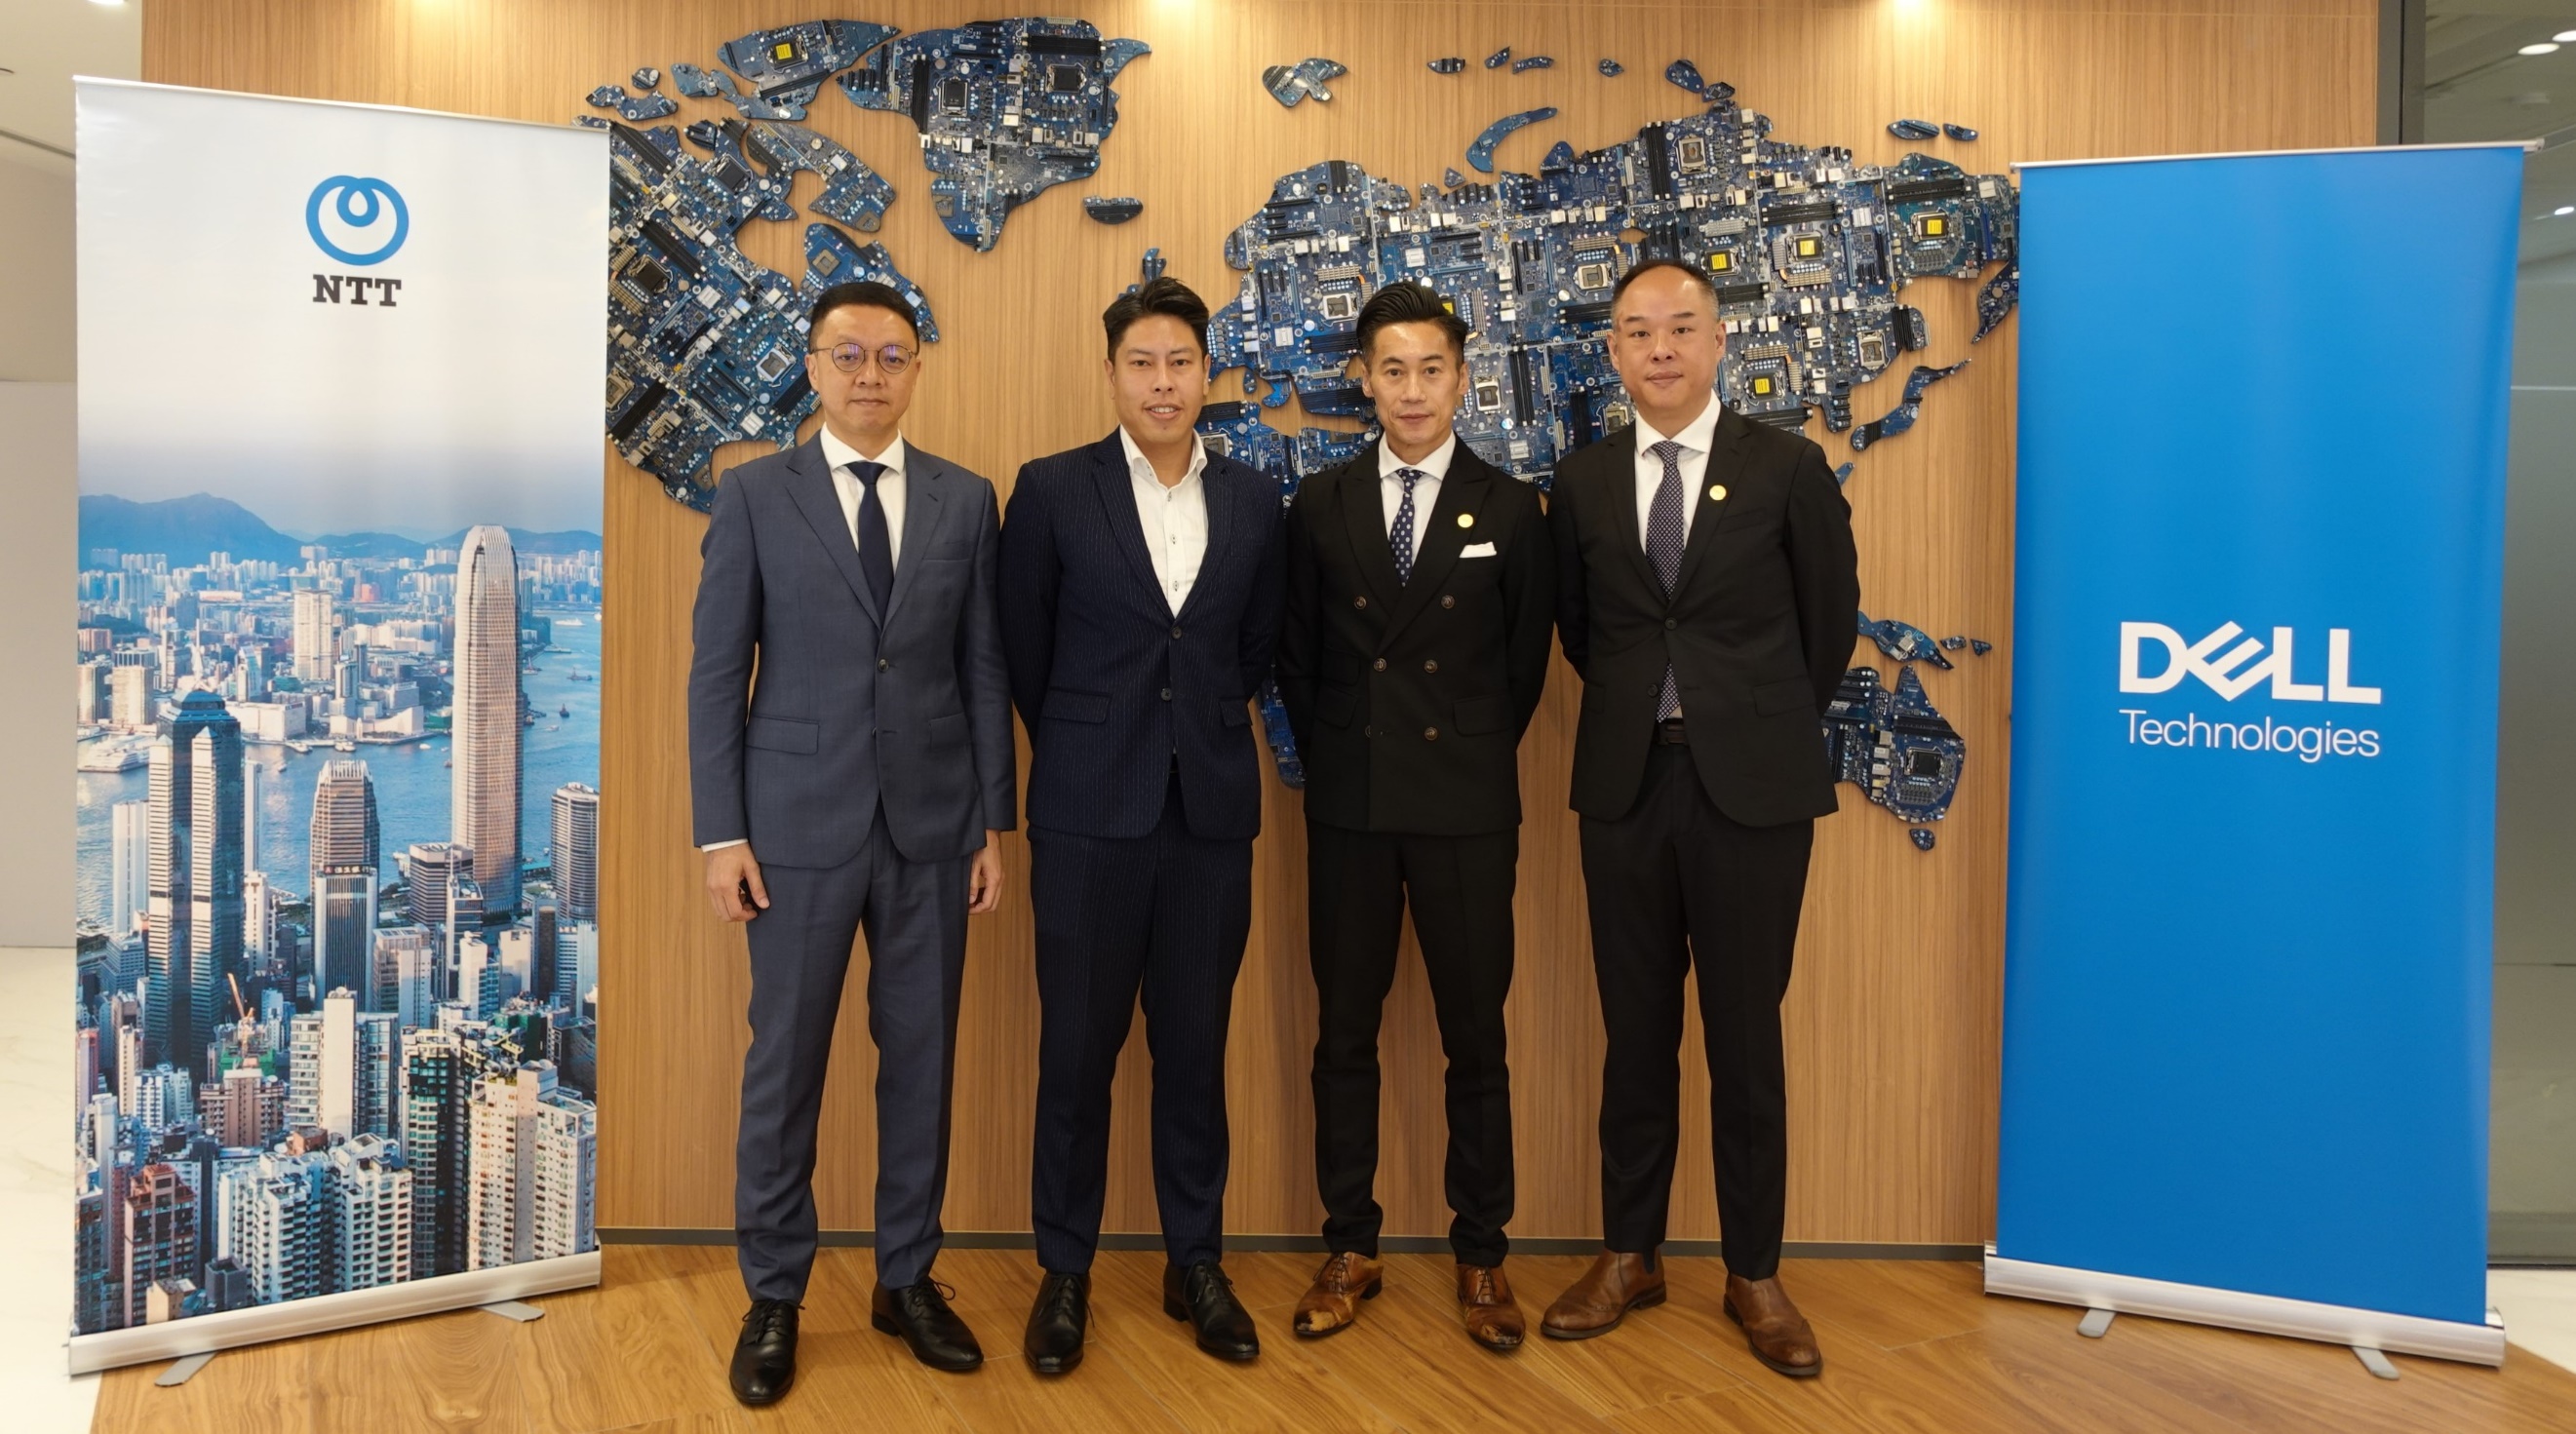 NTT Com Asia Limited香港数据中心高级副总裁苏耀宗（左一）、NTT Com Asia Limited企业和数码解决方案副总裁陈兆恒（左二）、Dell Technologies香港及澳门区总经理邝家麒（左三）、Dell Technologies系统工程部技术总监邹以伦（左四）